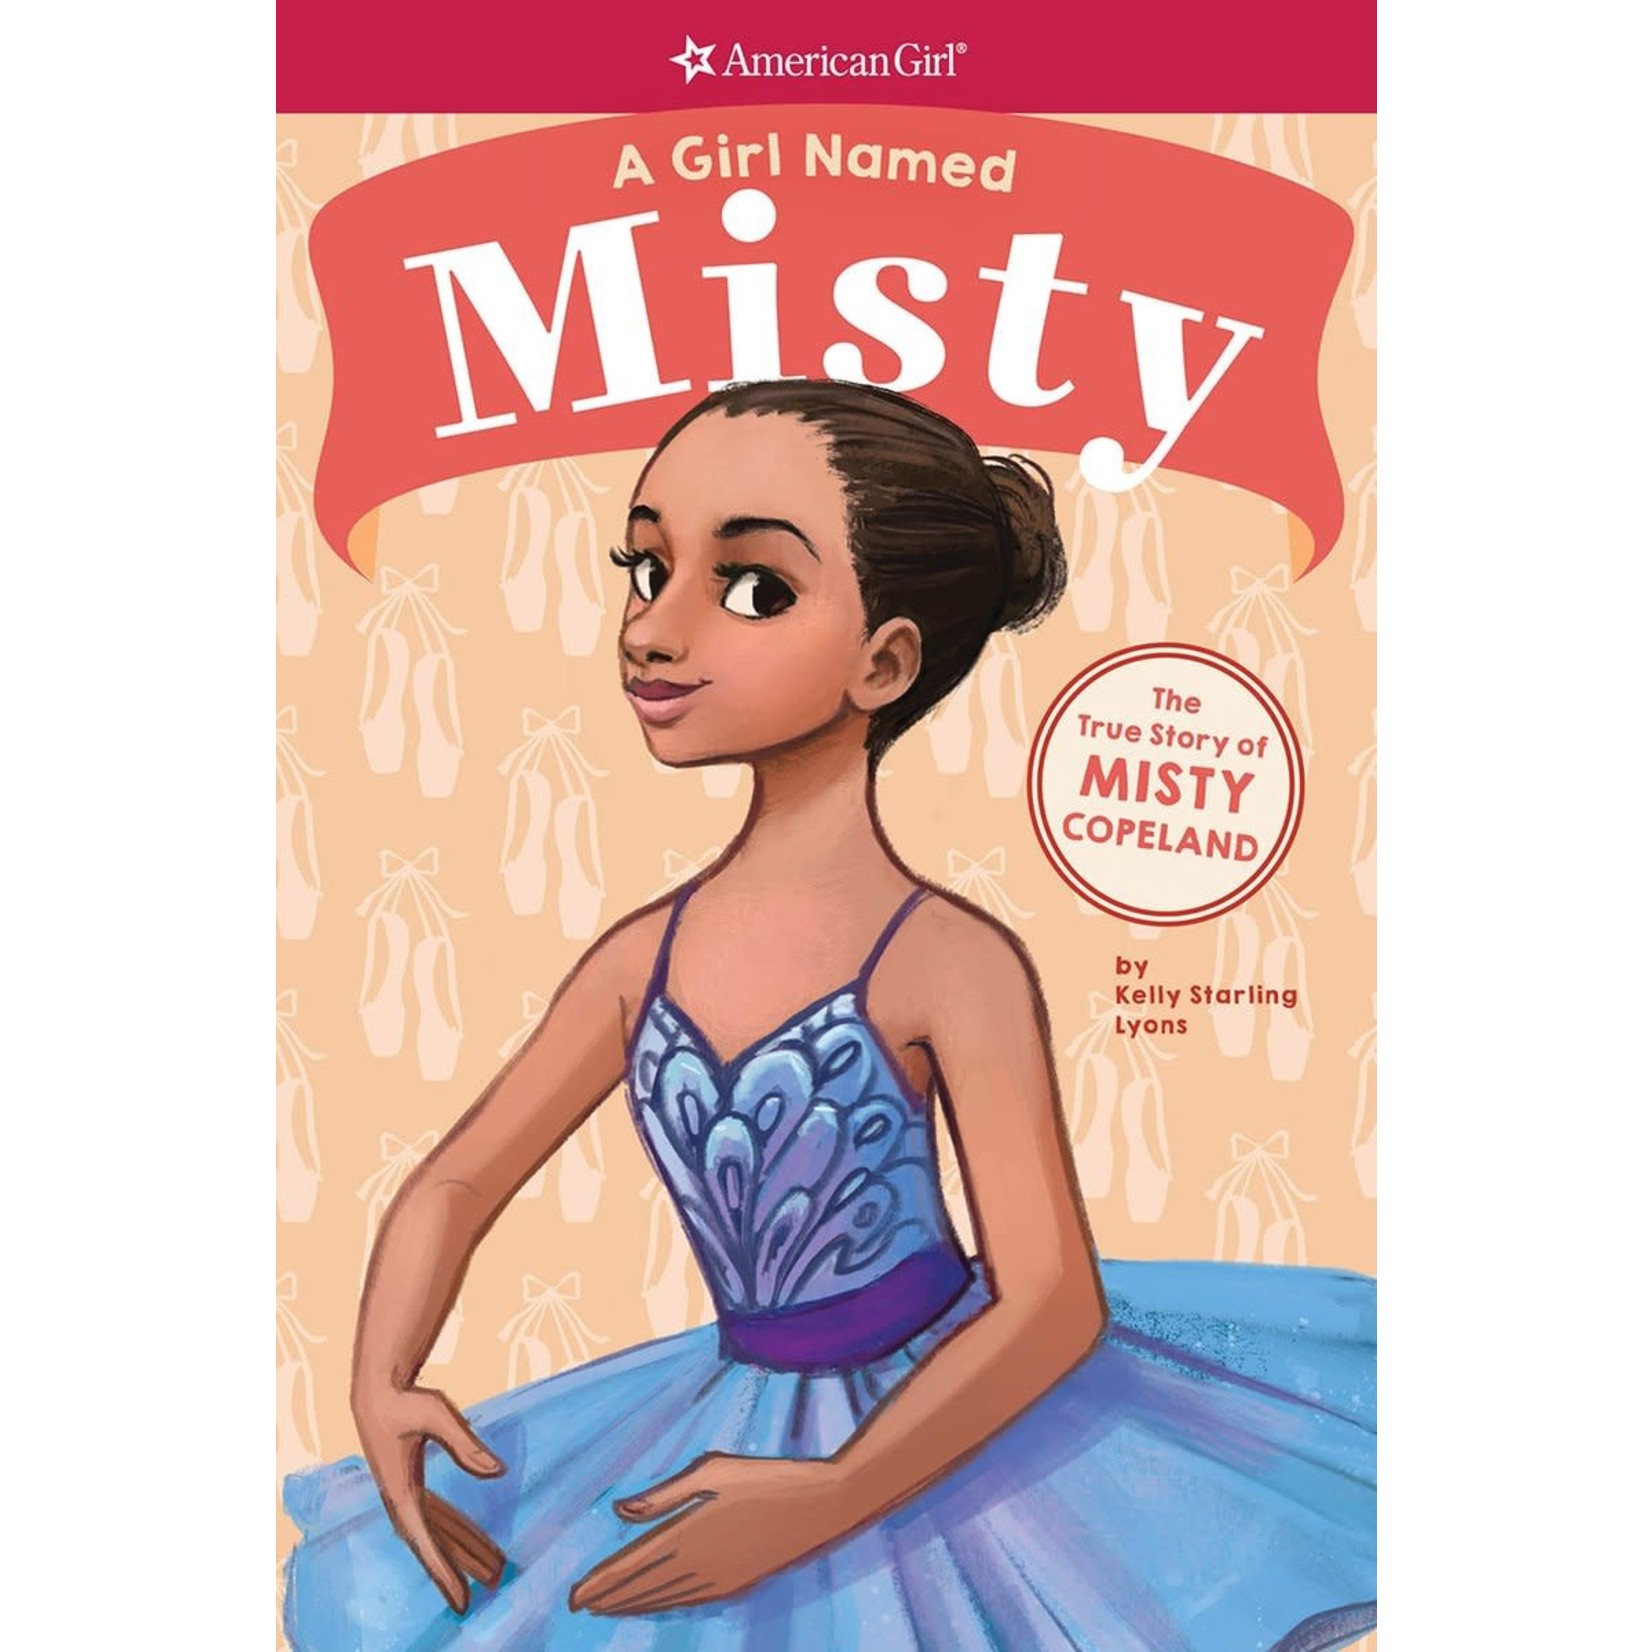 American Girl - A Girl Named Misty - The True Story of Misty Copeland